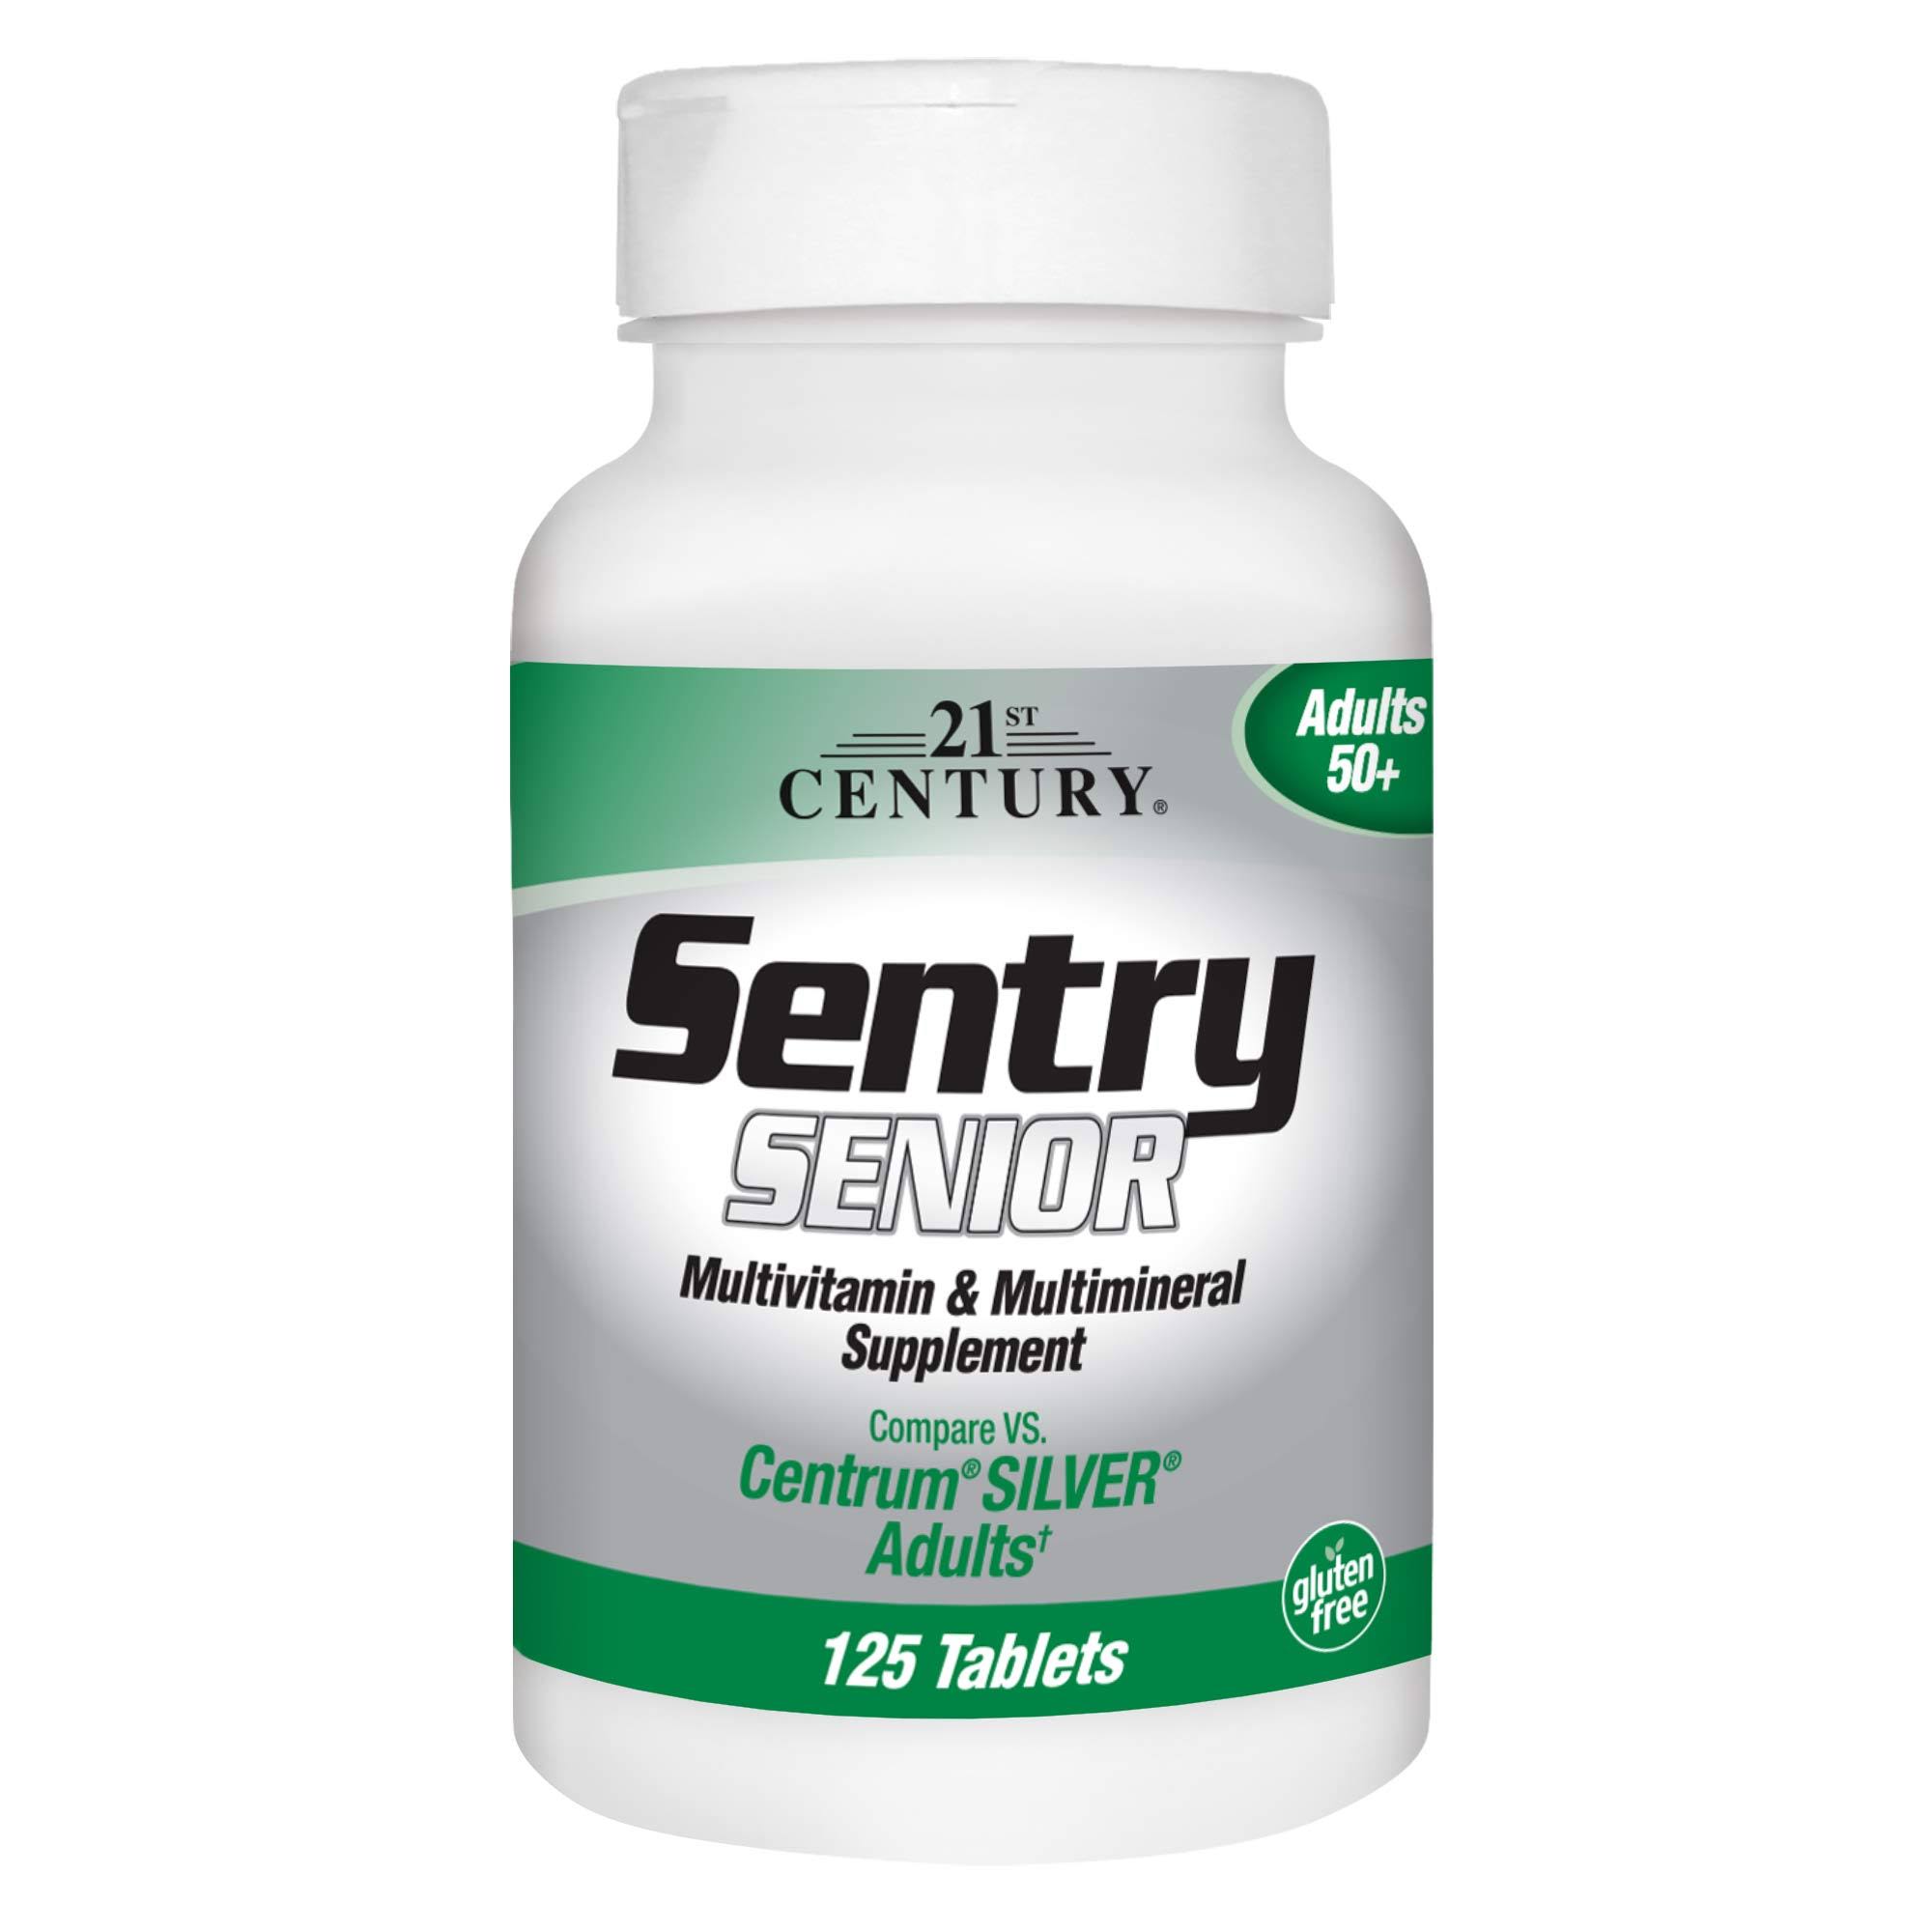 21st Century Sentry Senior Multivitamins - 125ct